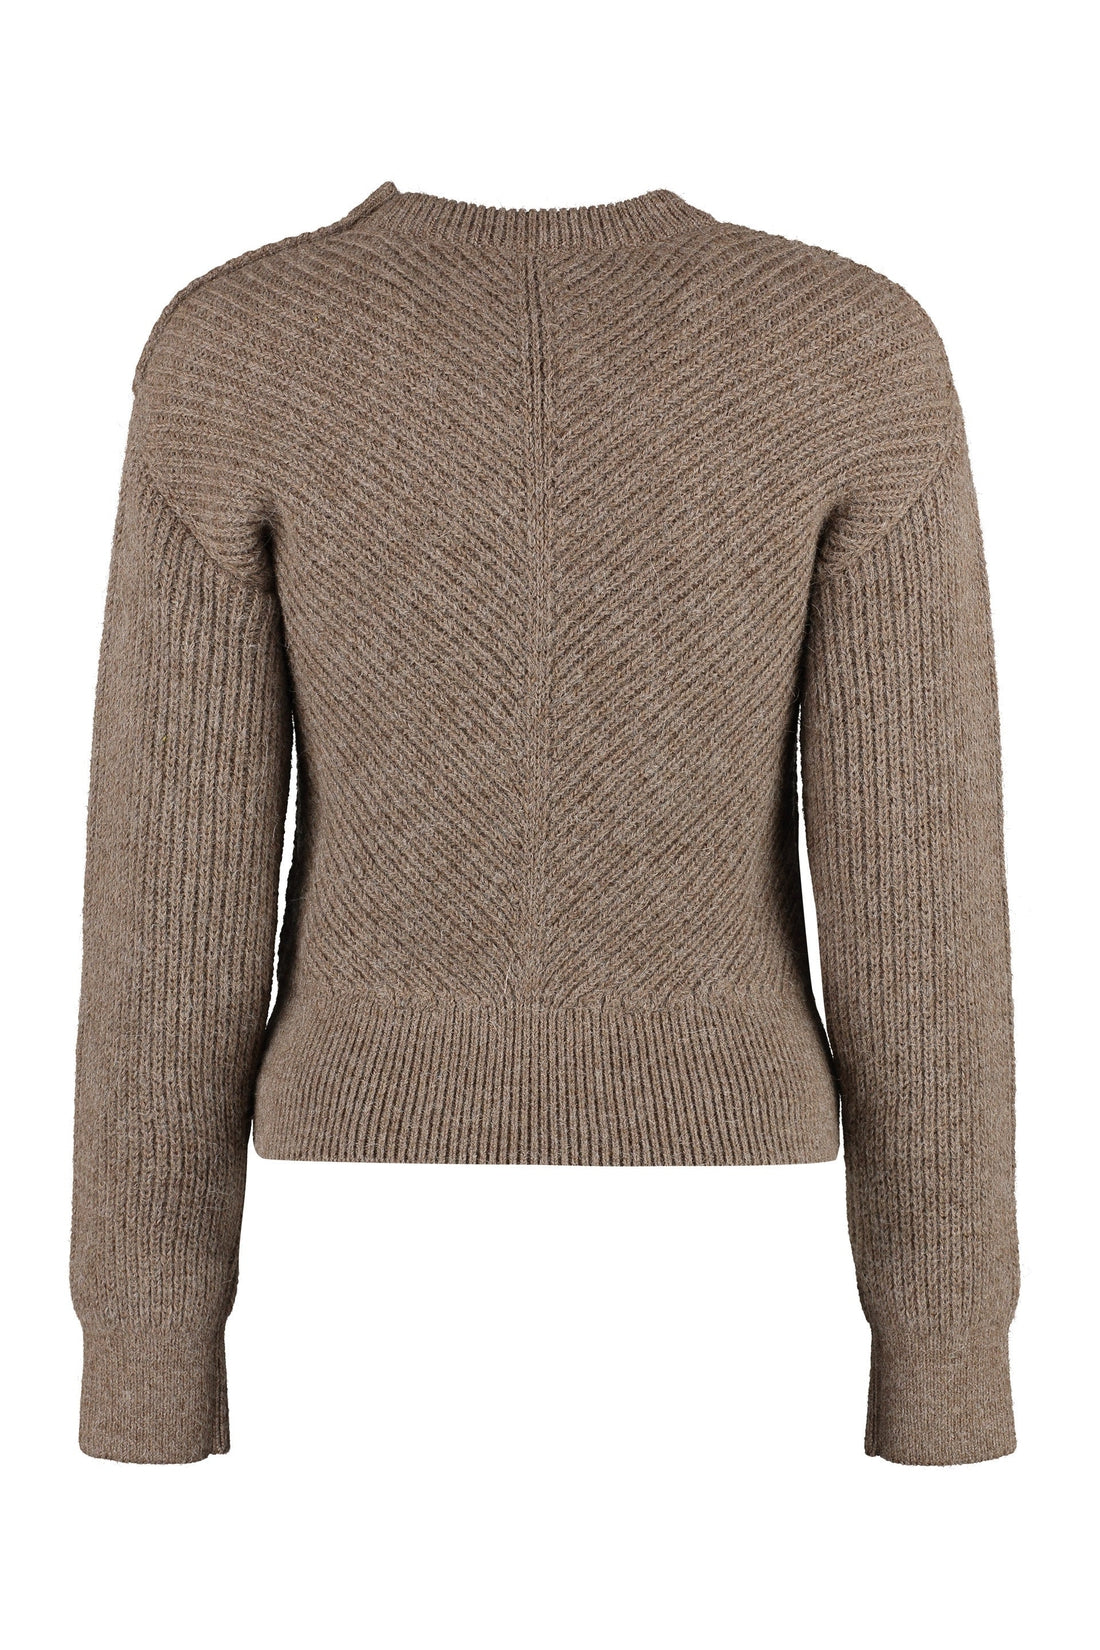 Bottega Veneta-OUTLET-SALE-Long sleeve crew-neck sweater-ARCHIVIST